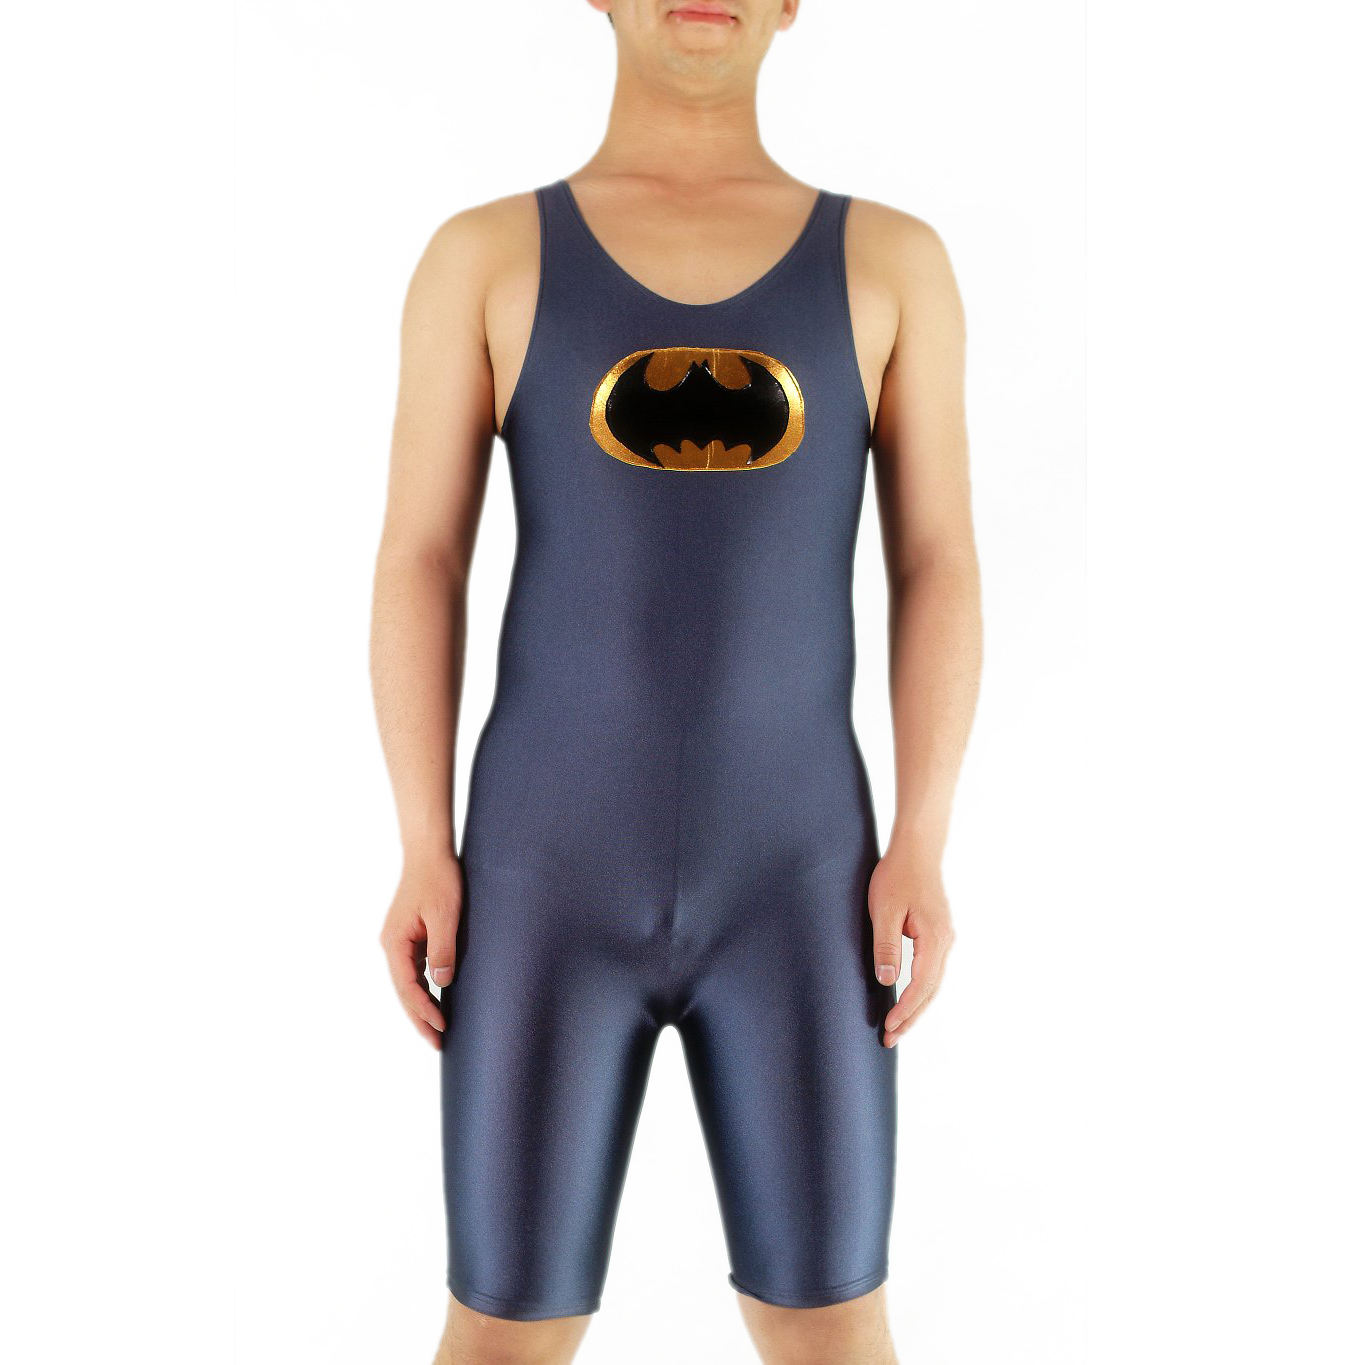 Men's Jumpsuit-styled Dark Grey Lycra Spandex Scoop Catsuit (M10